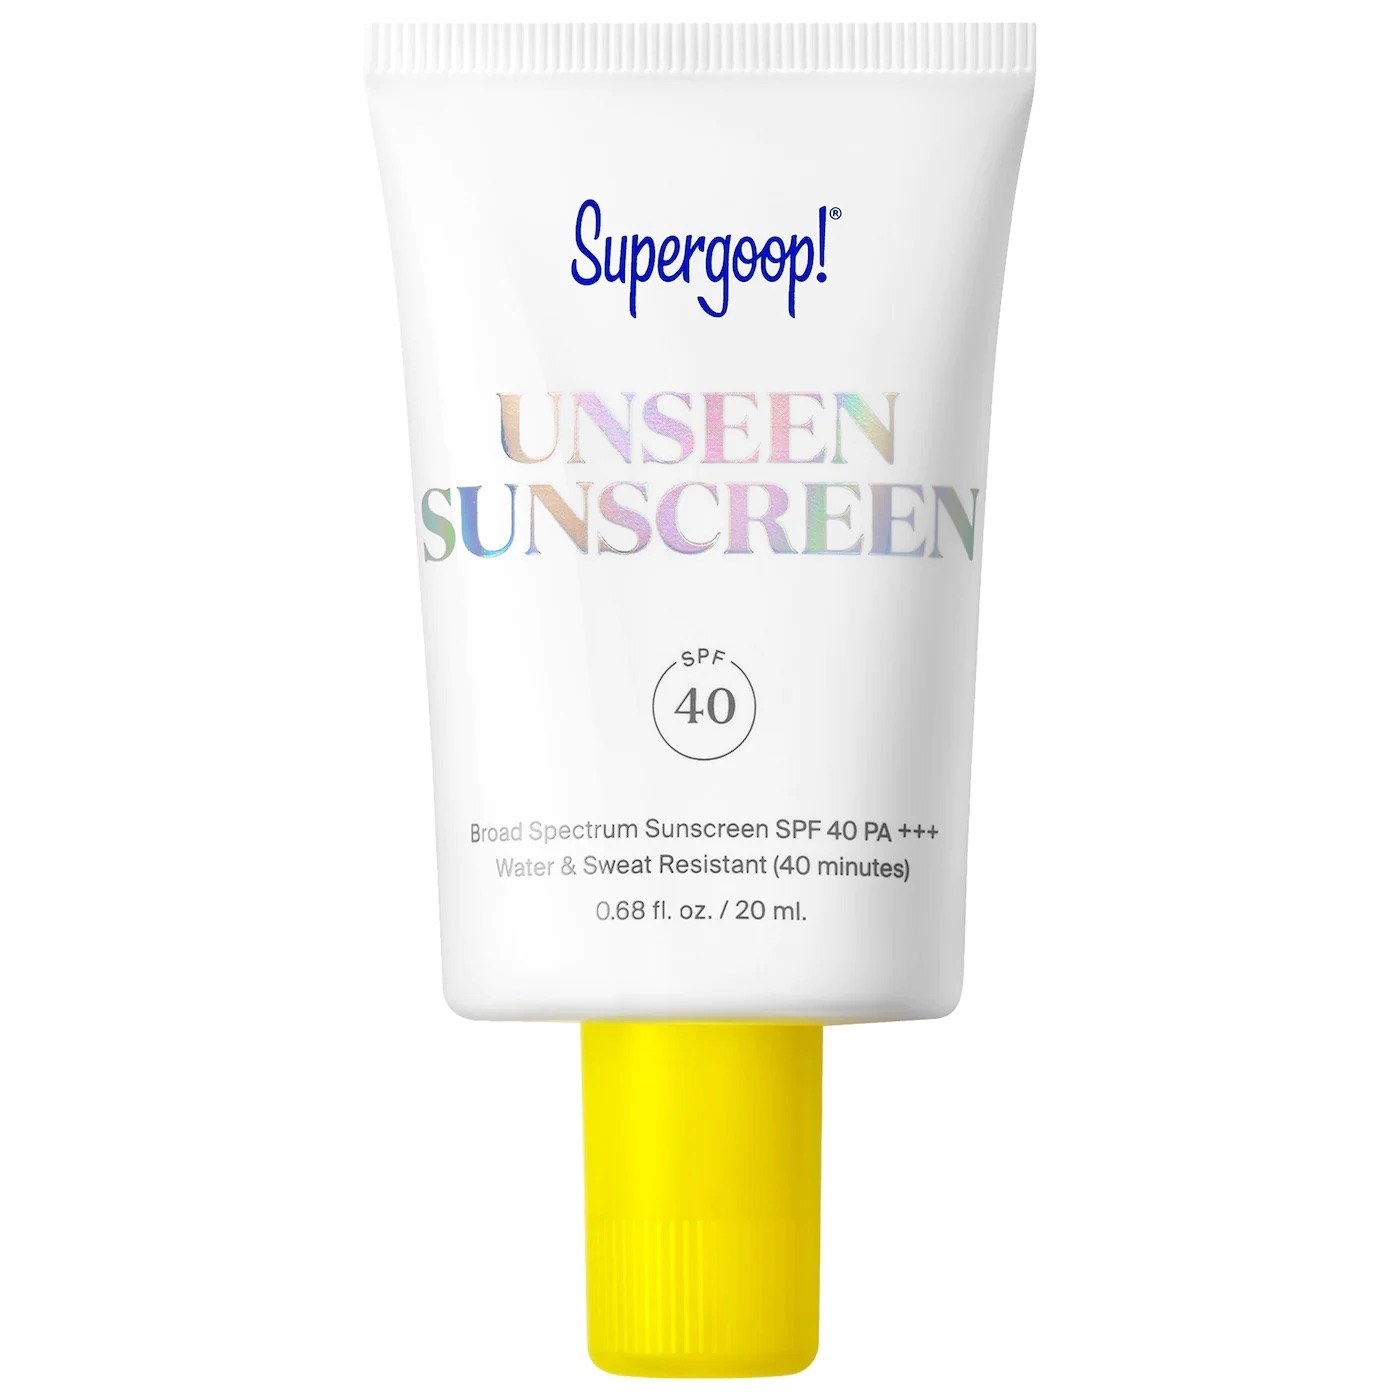 A tube of Supergoop Unseen Suncreen.